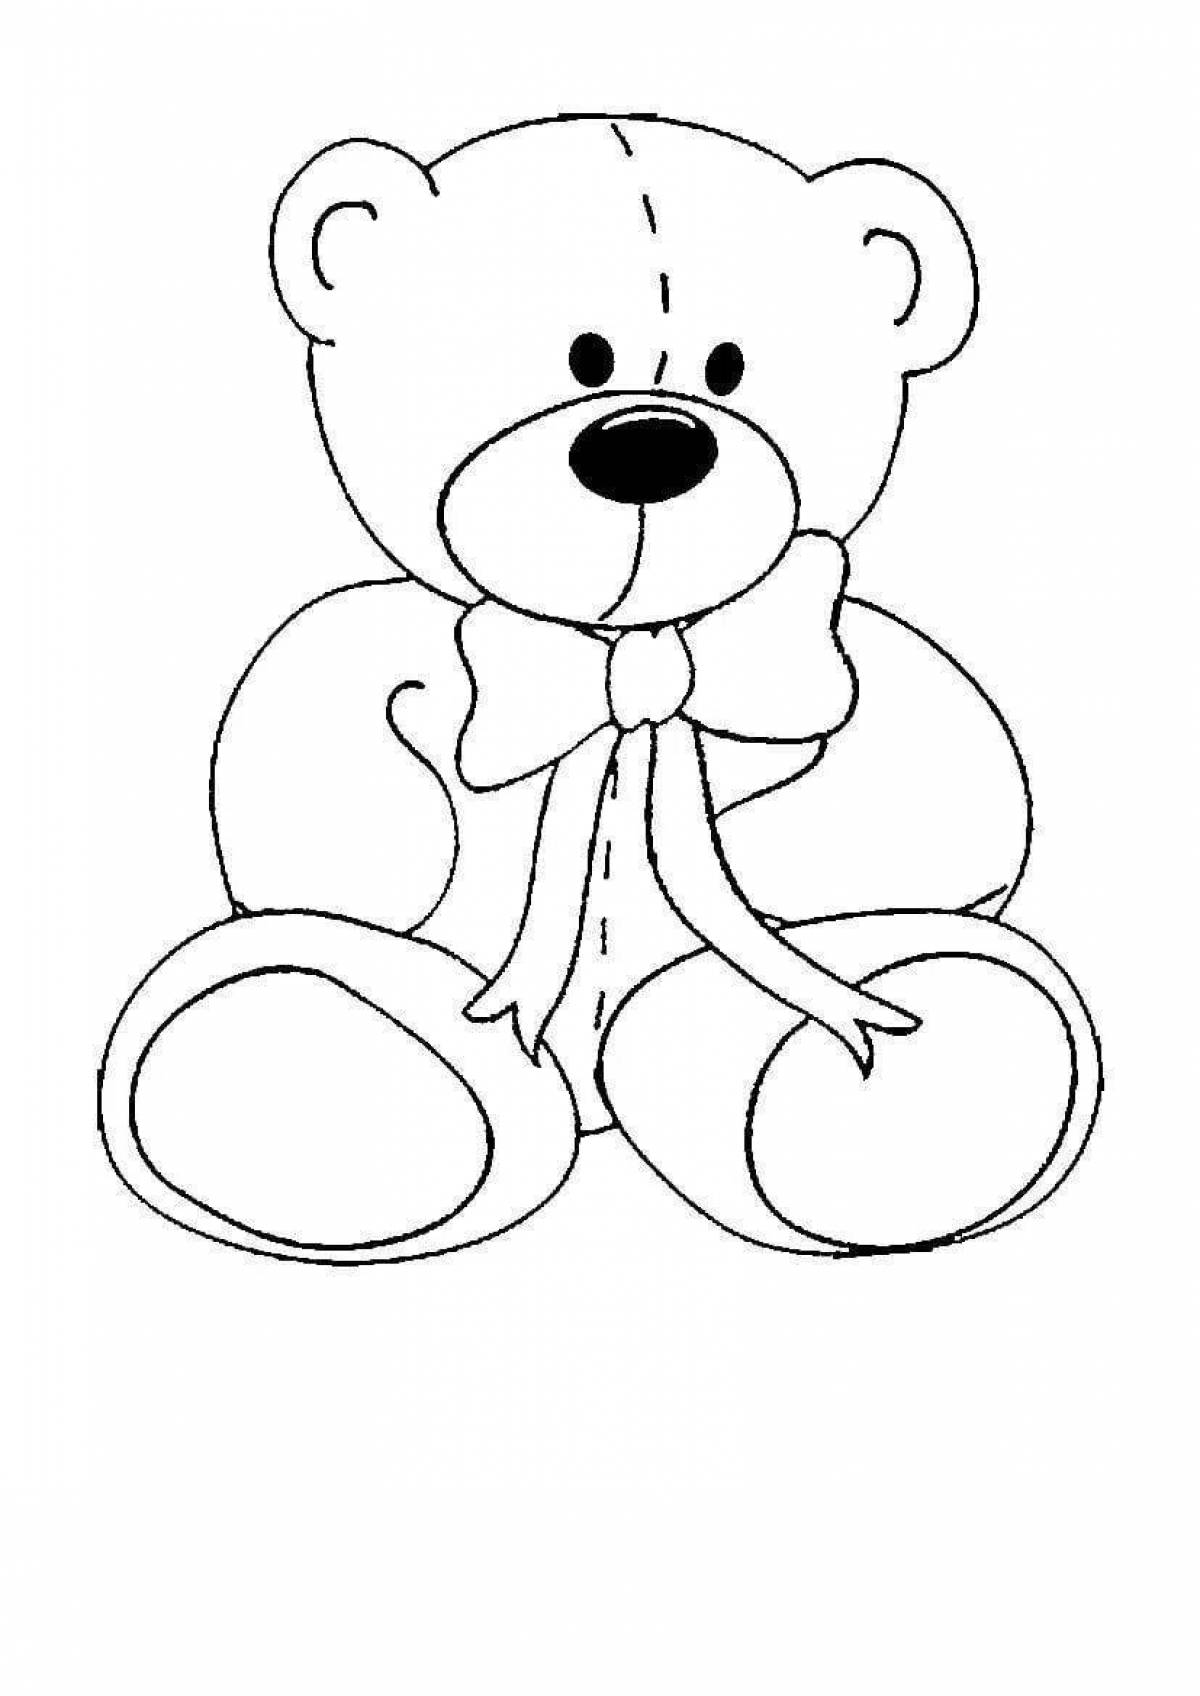 Cozy bear coloring page